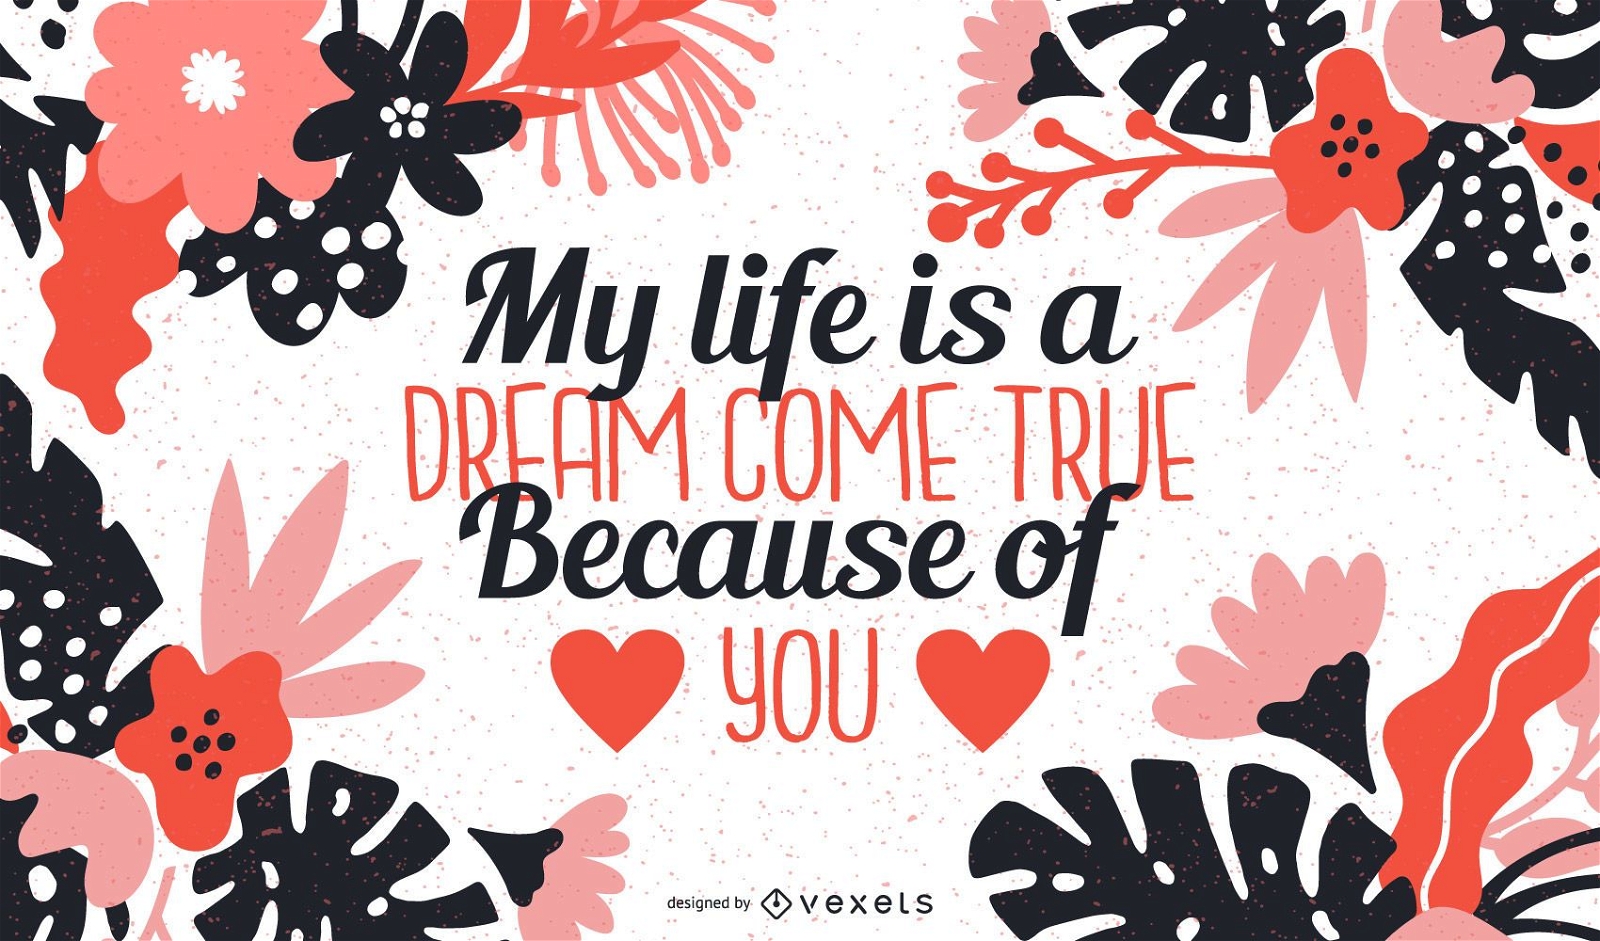 dreams come true love quotes